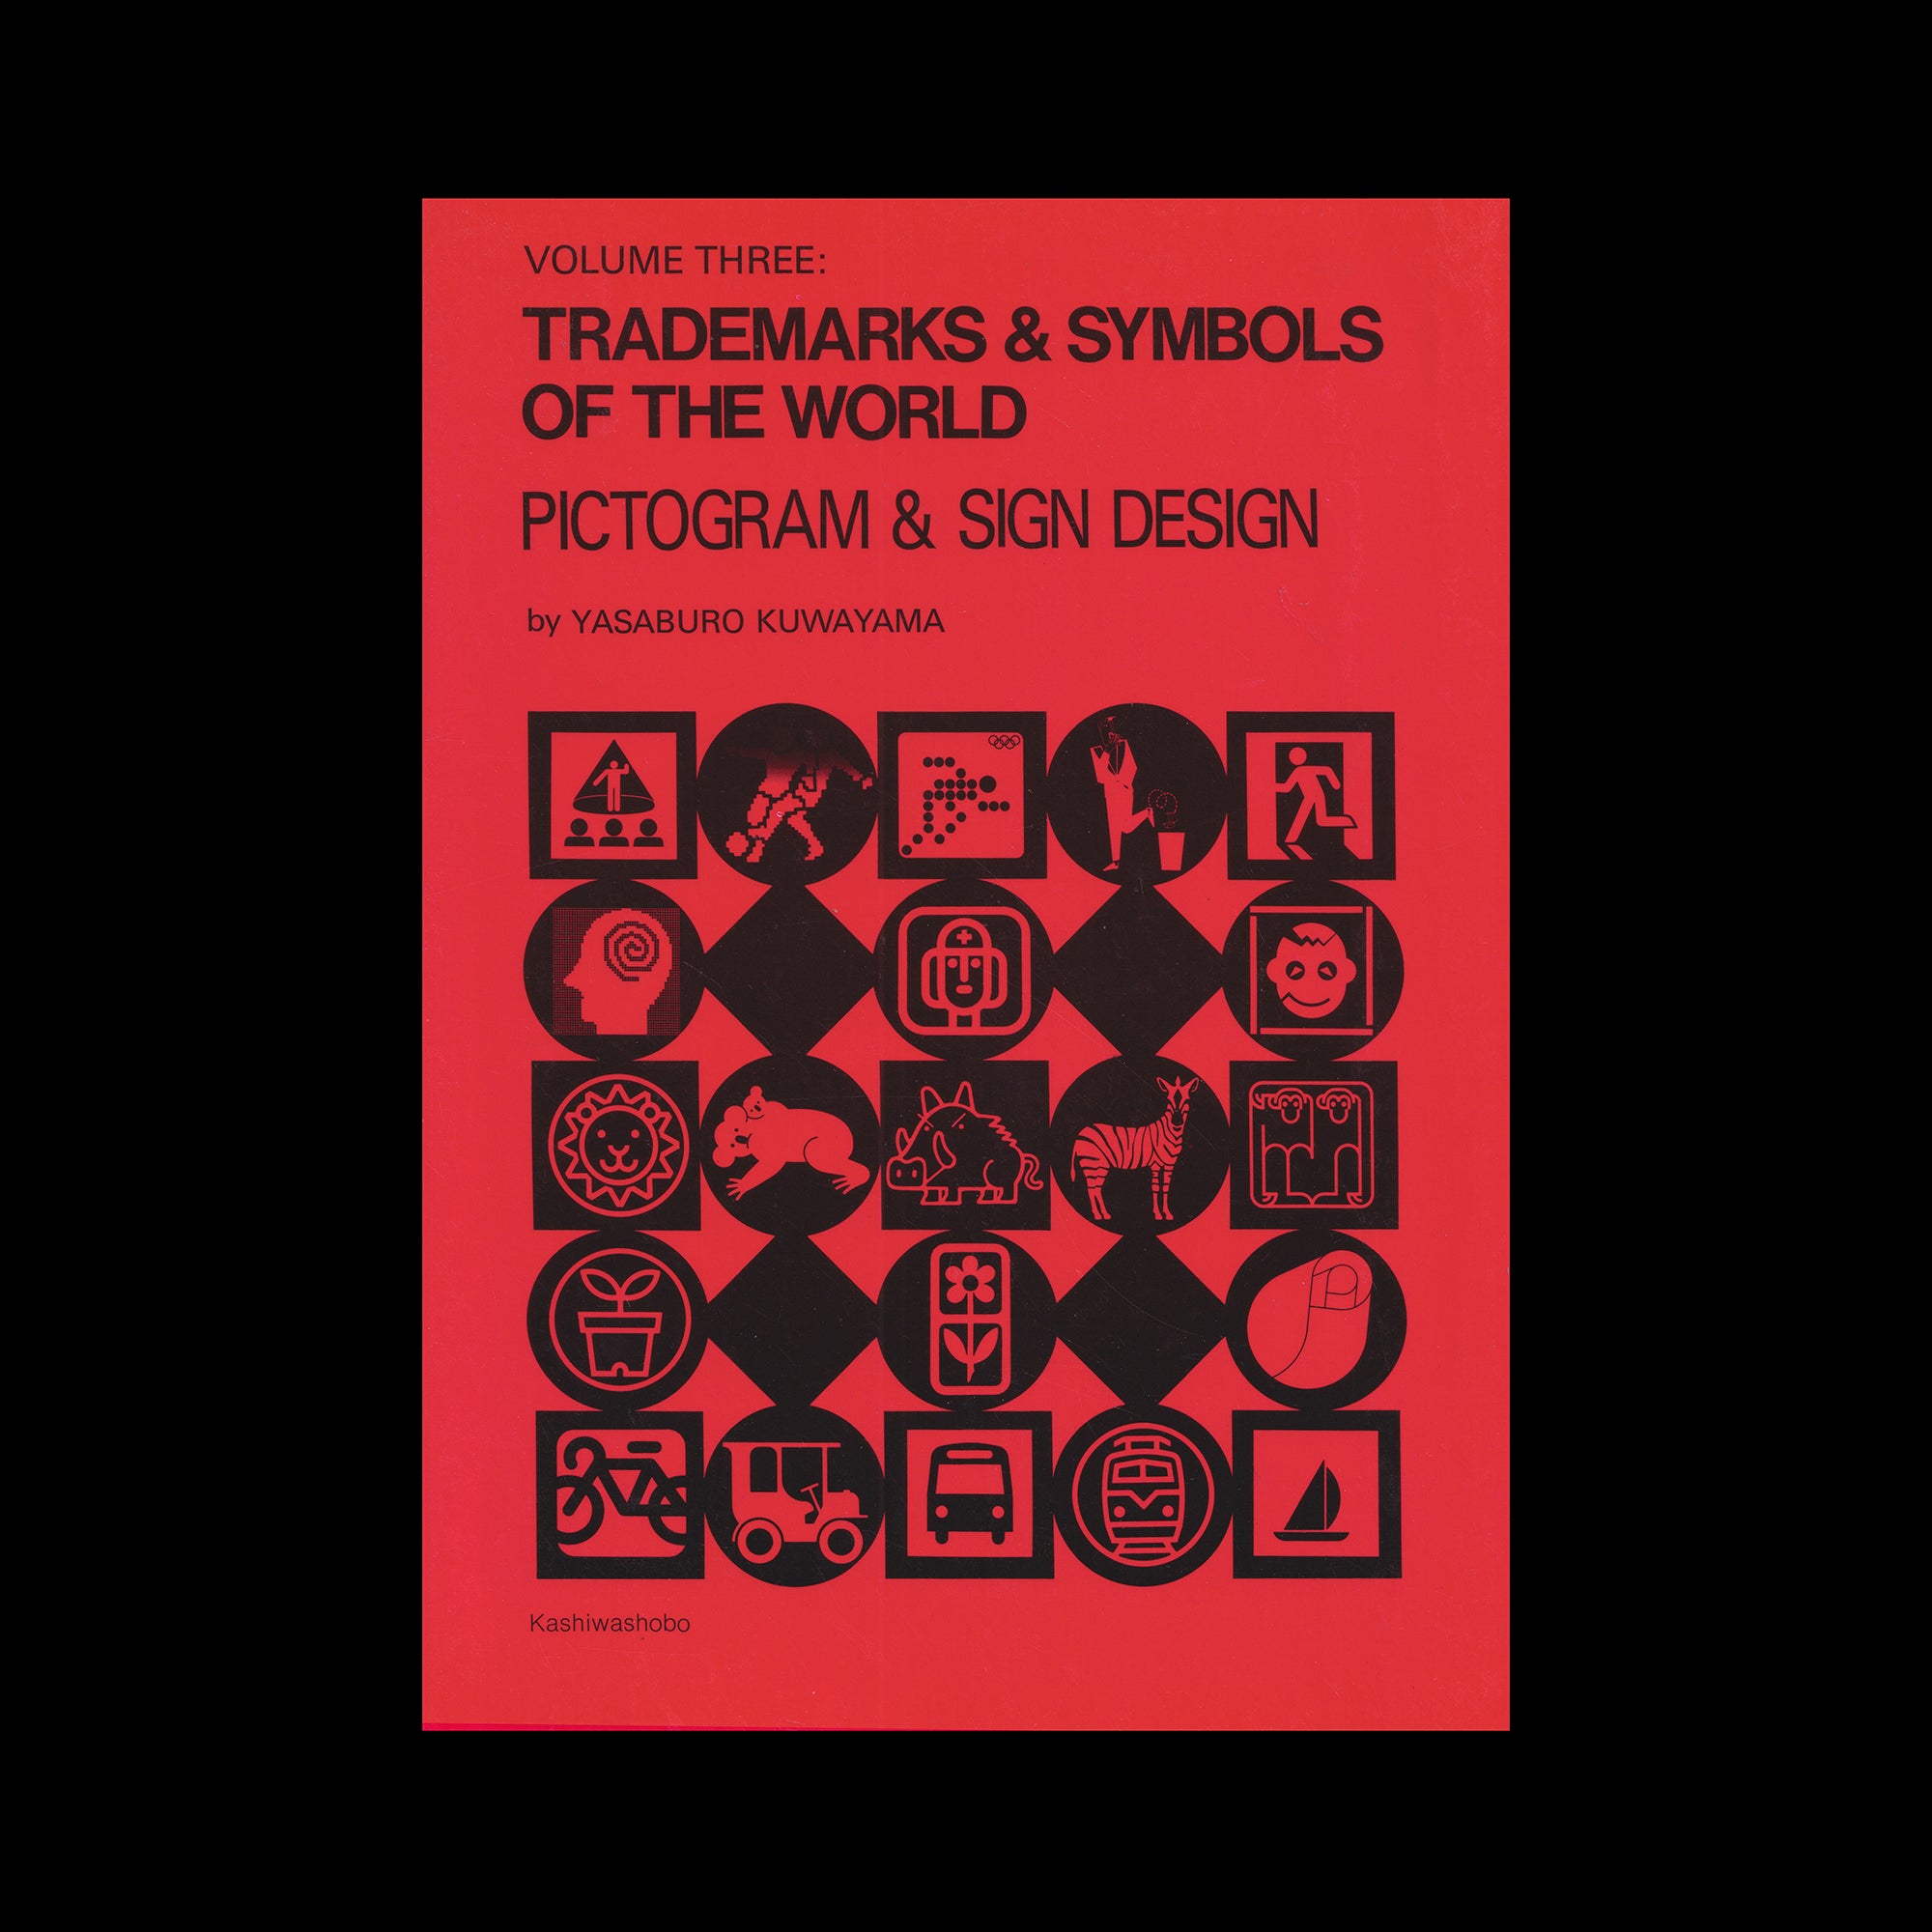 Trademarks & Symbols of the World, 1989 (Complete Set)